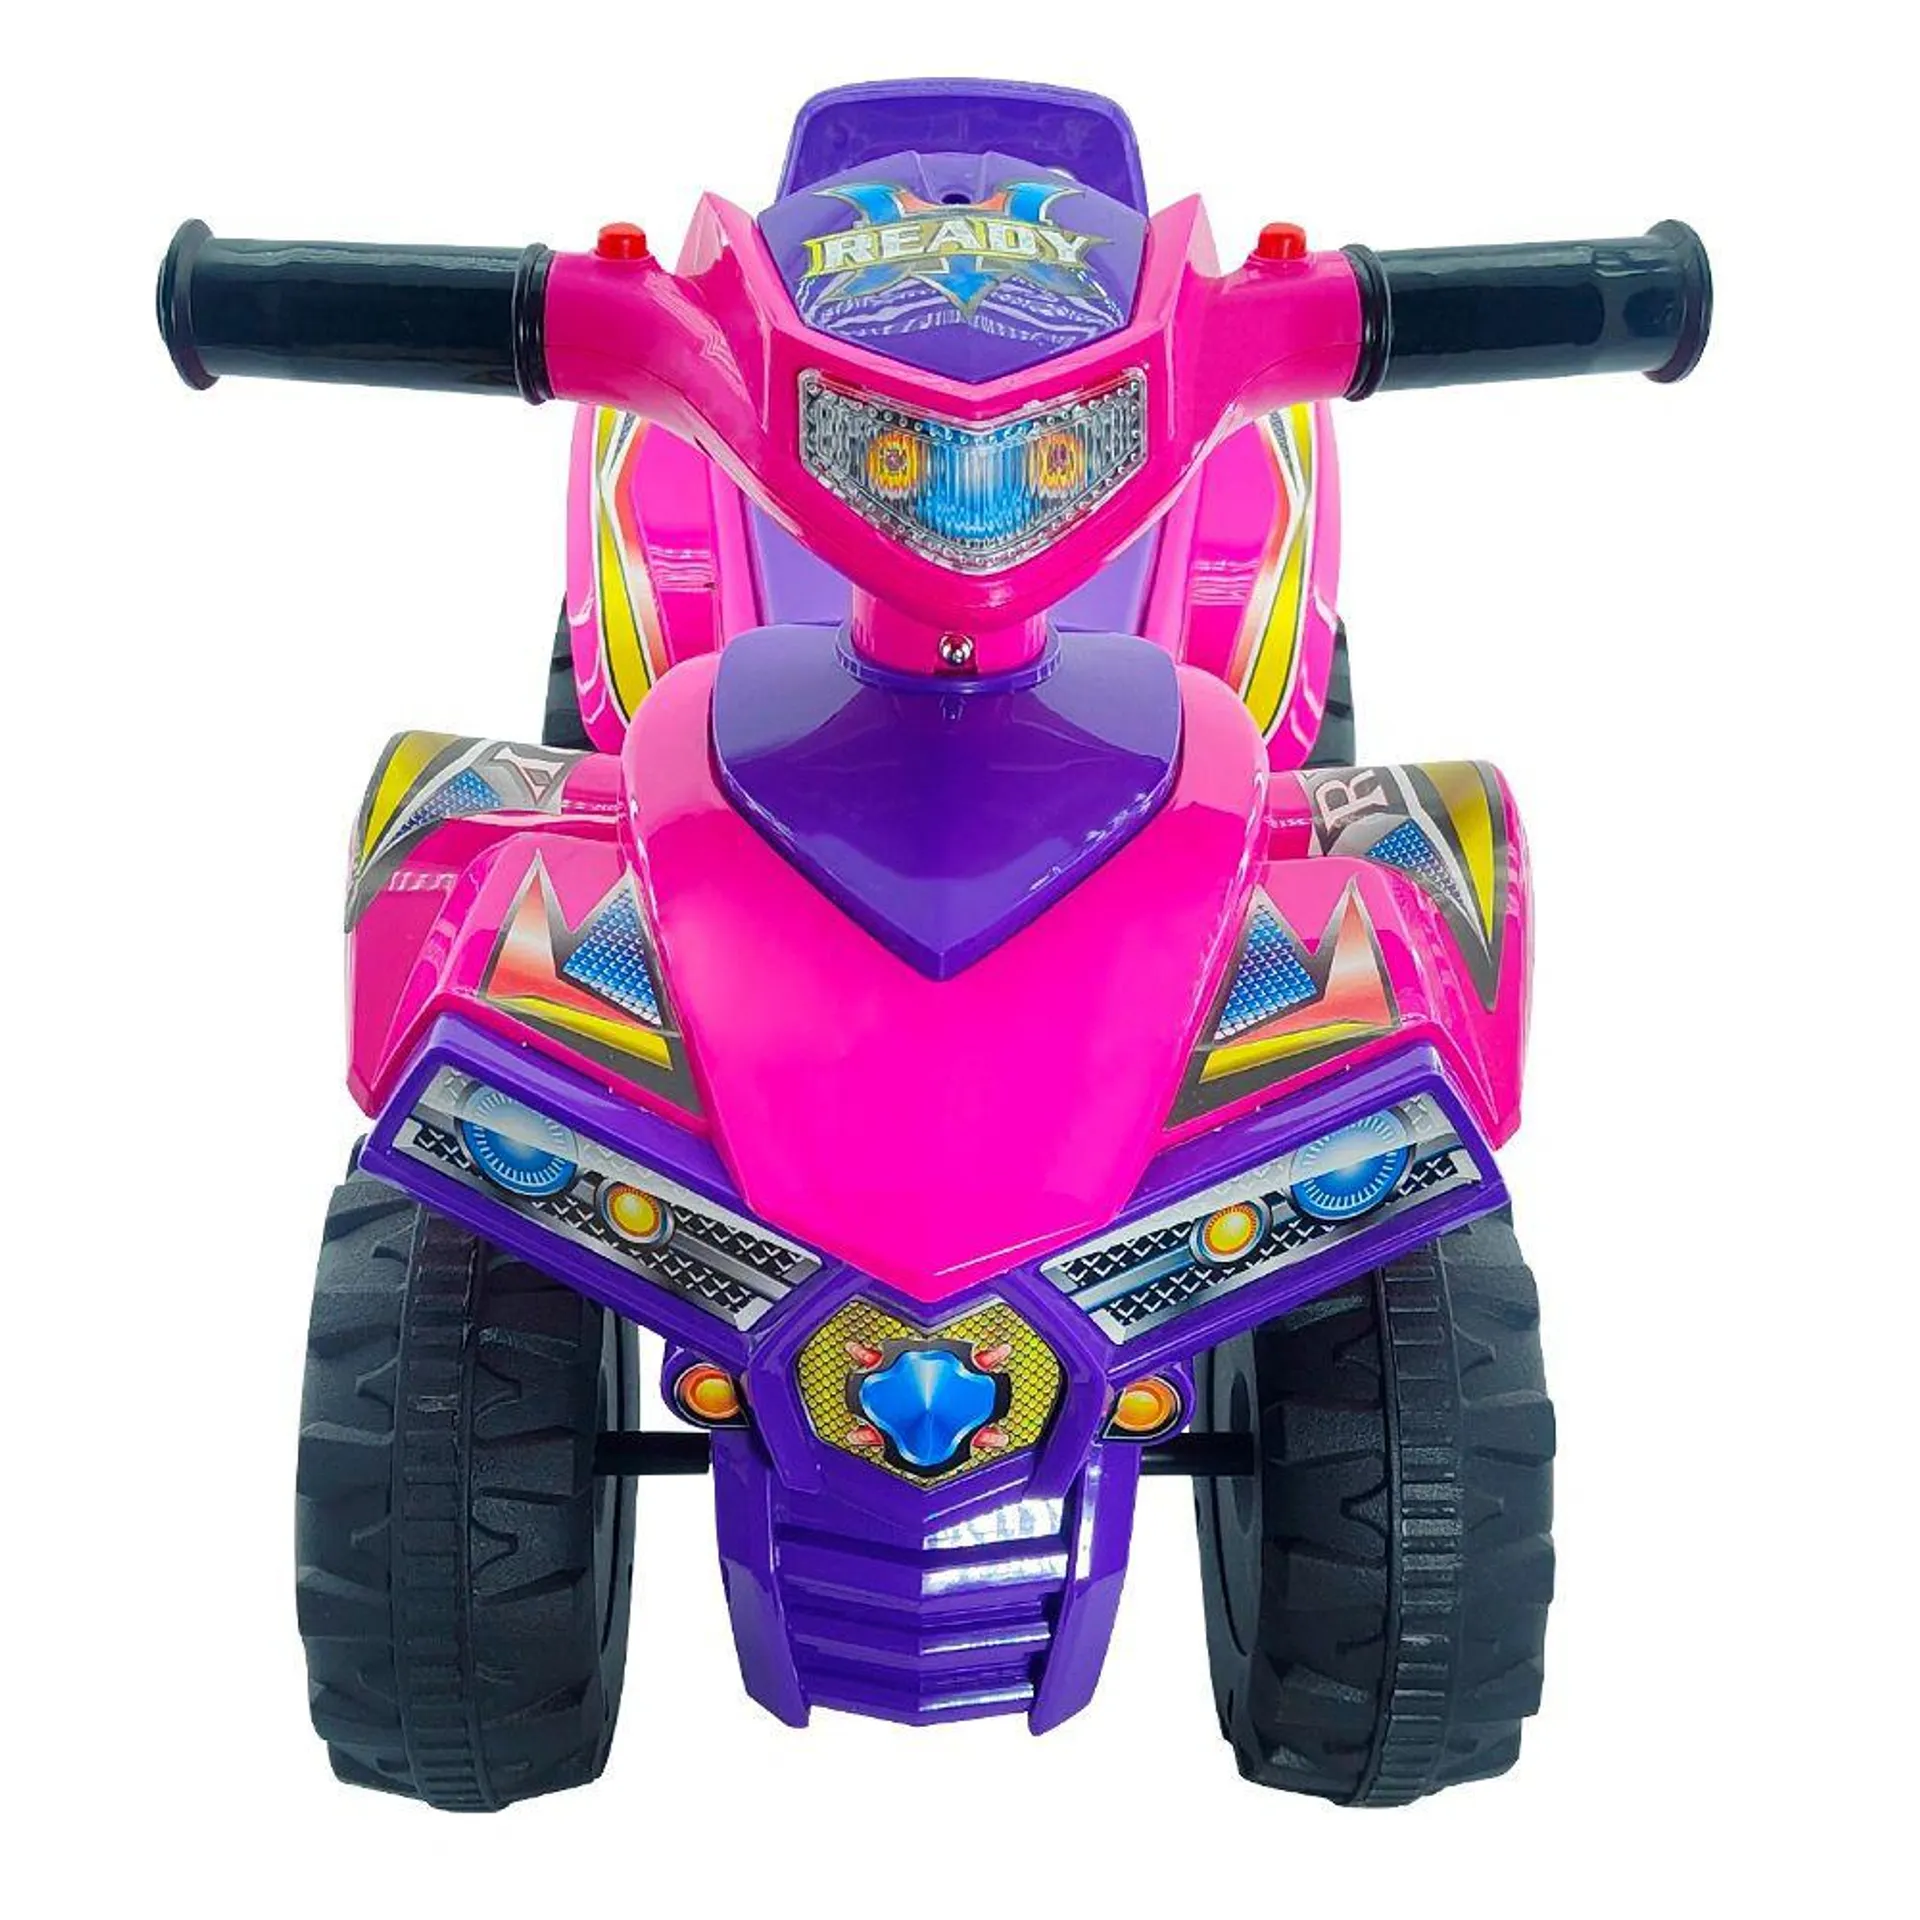 Montable para Niños Cuatrimoto BM Toys Super ATV